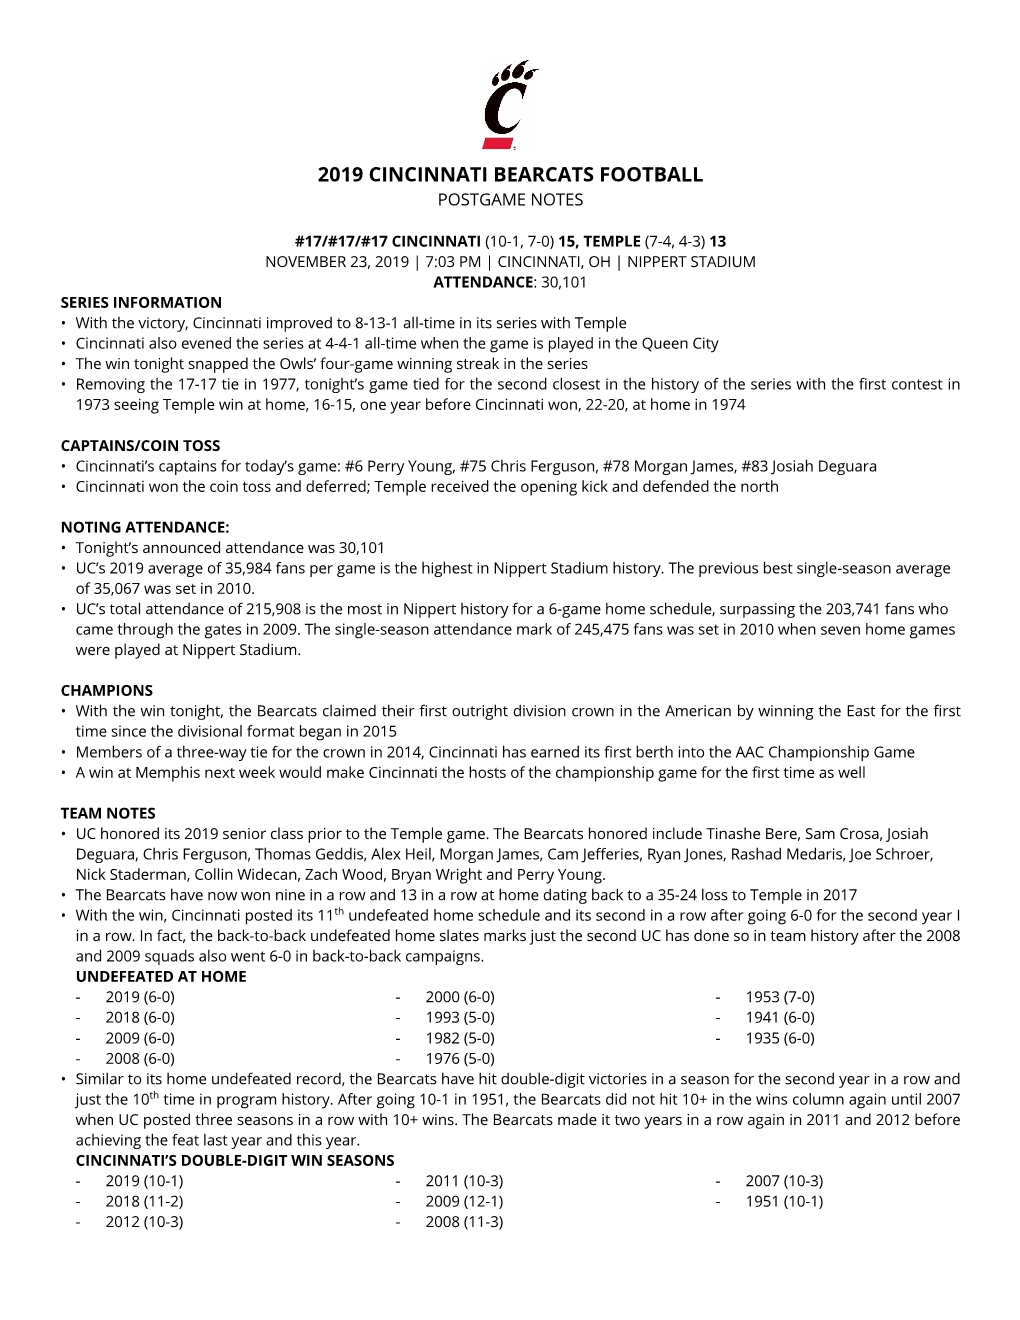 2019 Cincinnati Bearcats Football Postgame Notes